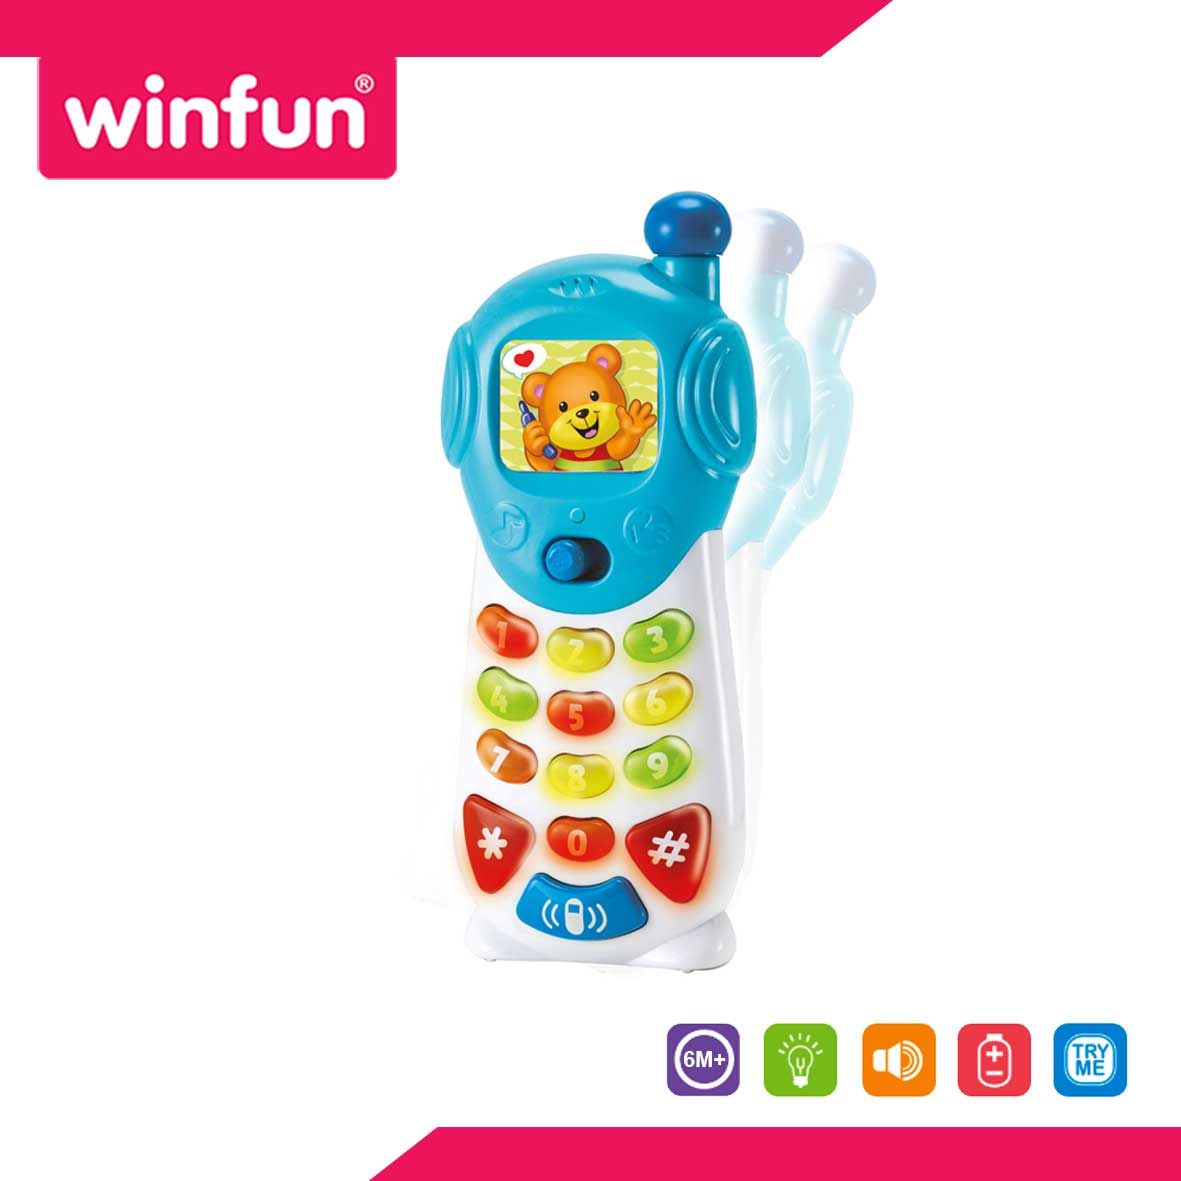 Winfun Light-Up Talking Phone - 1